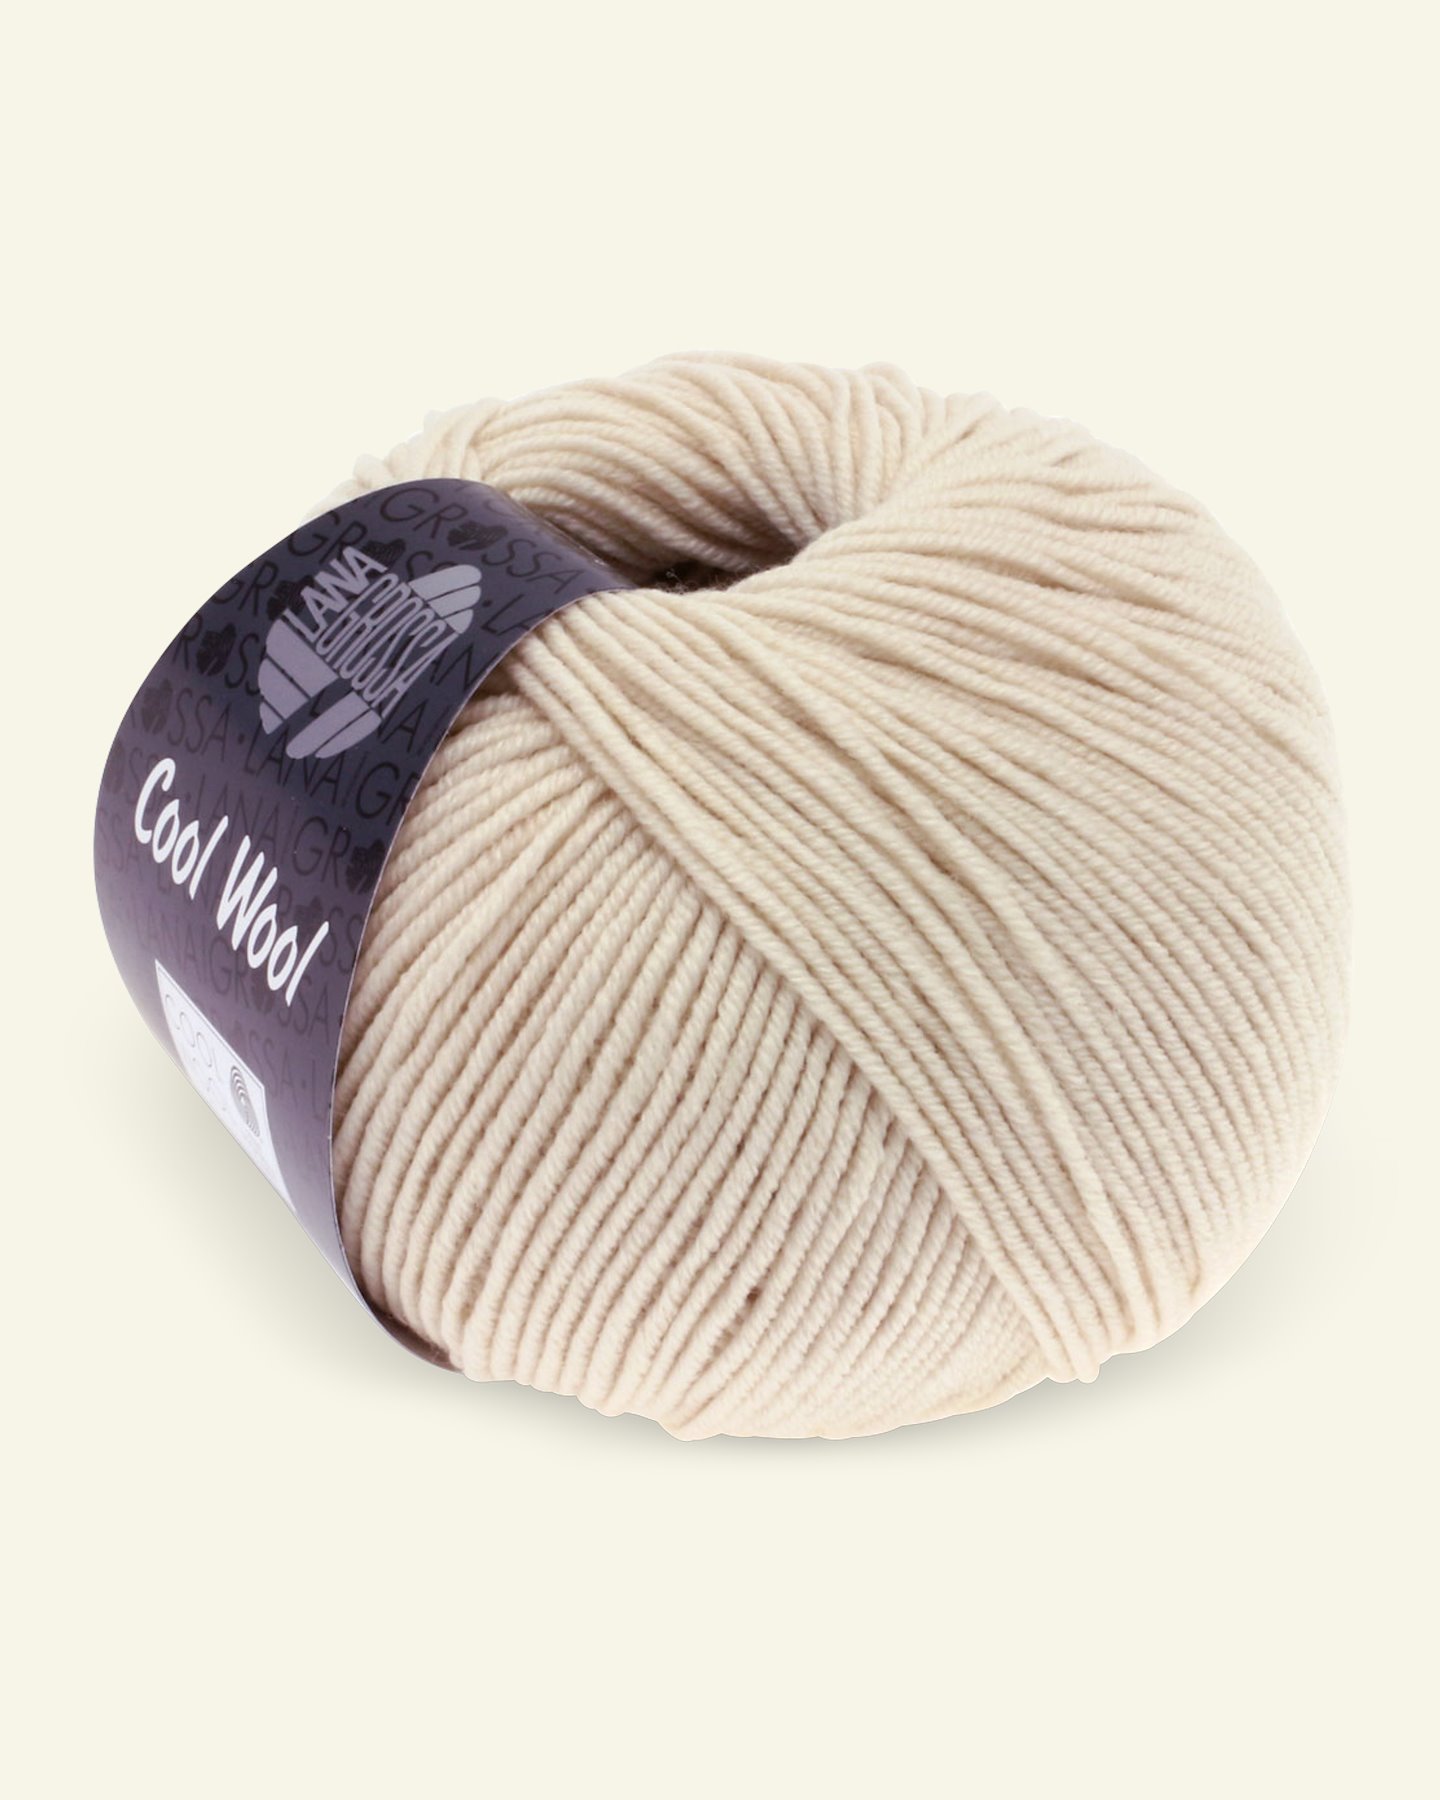 Lana Grossa, extrafine merino wool yarn "Cool Wool", light sand 90001133_pack